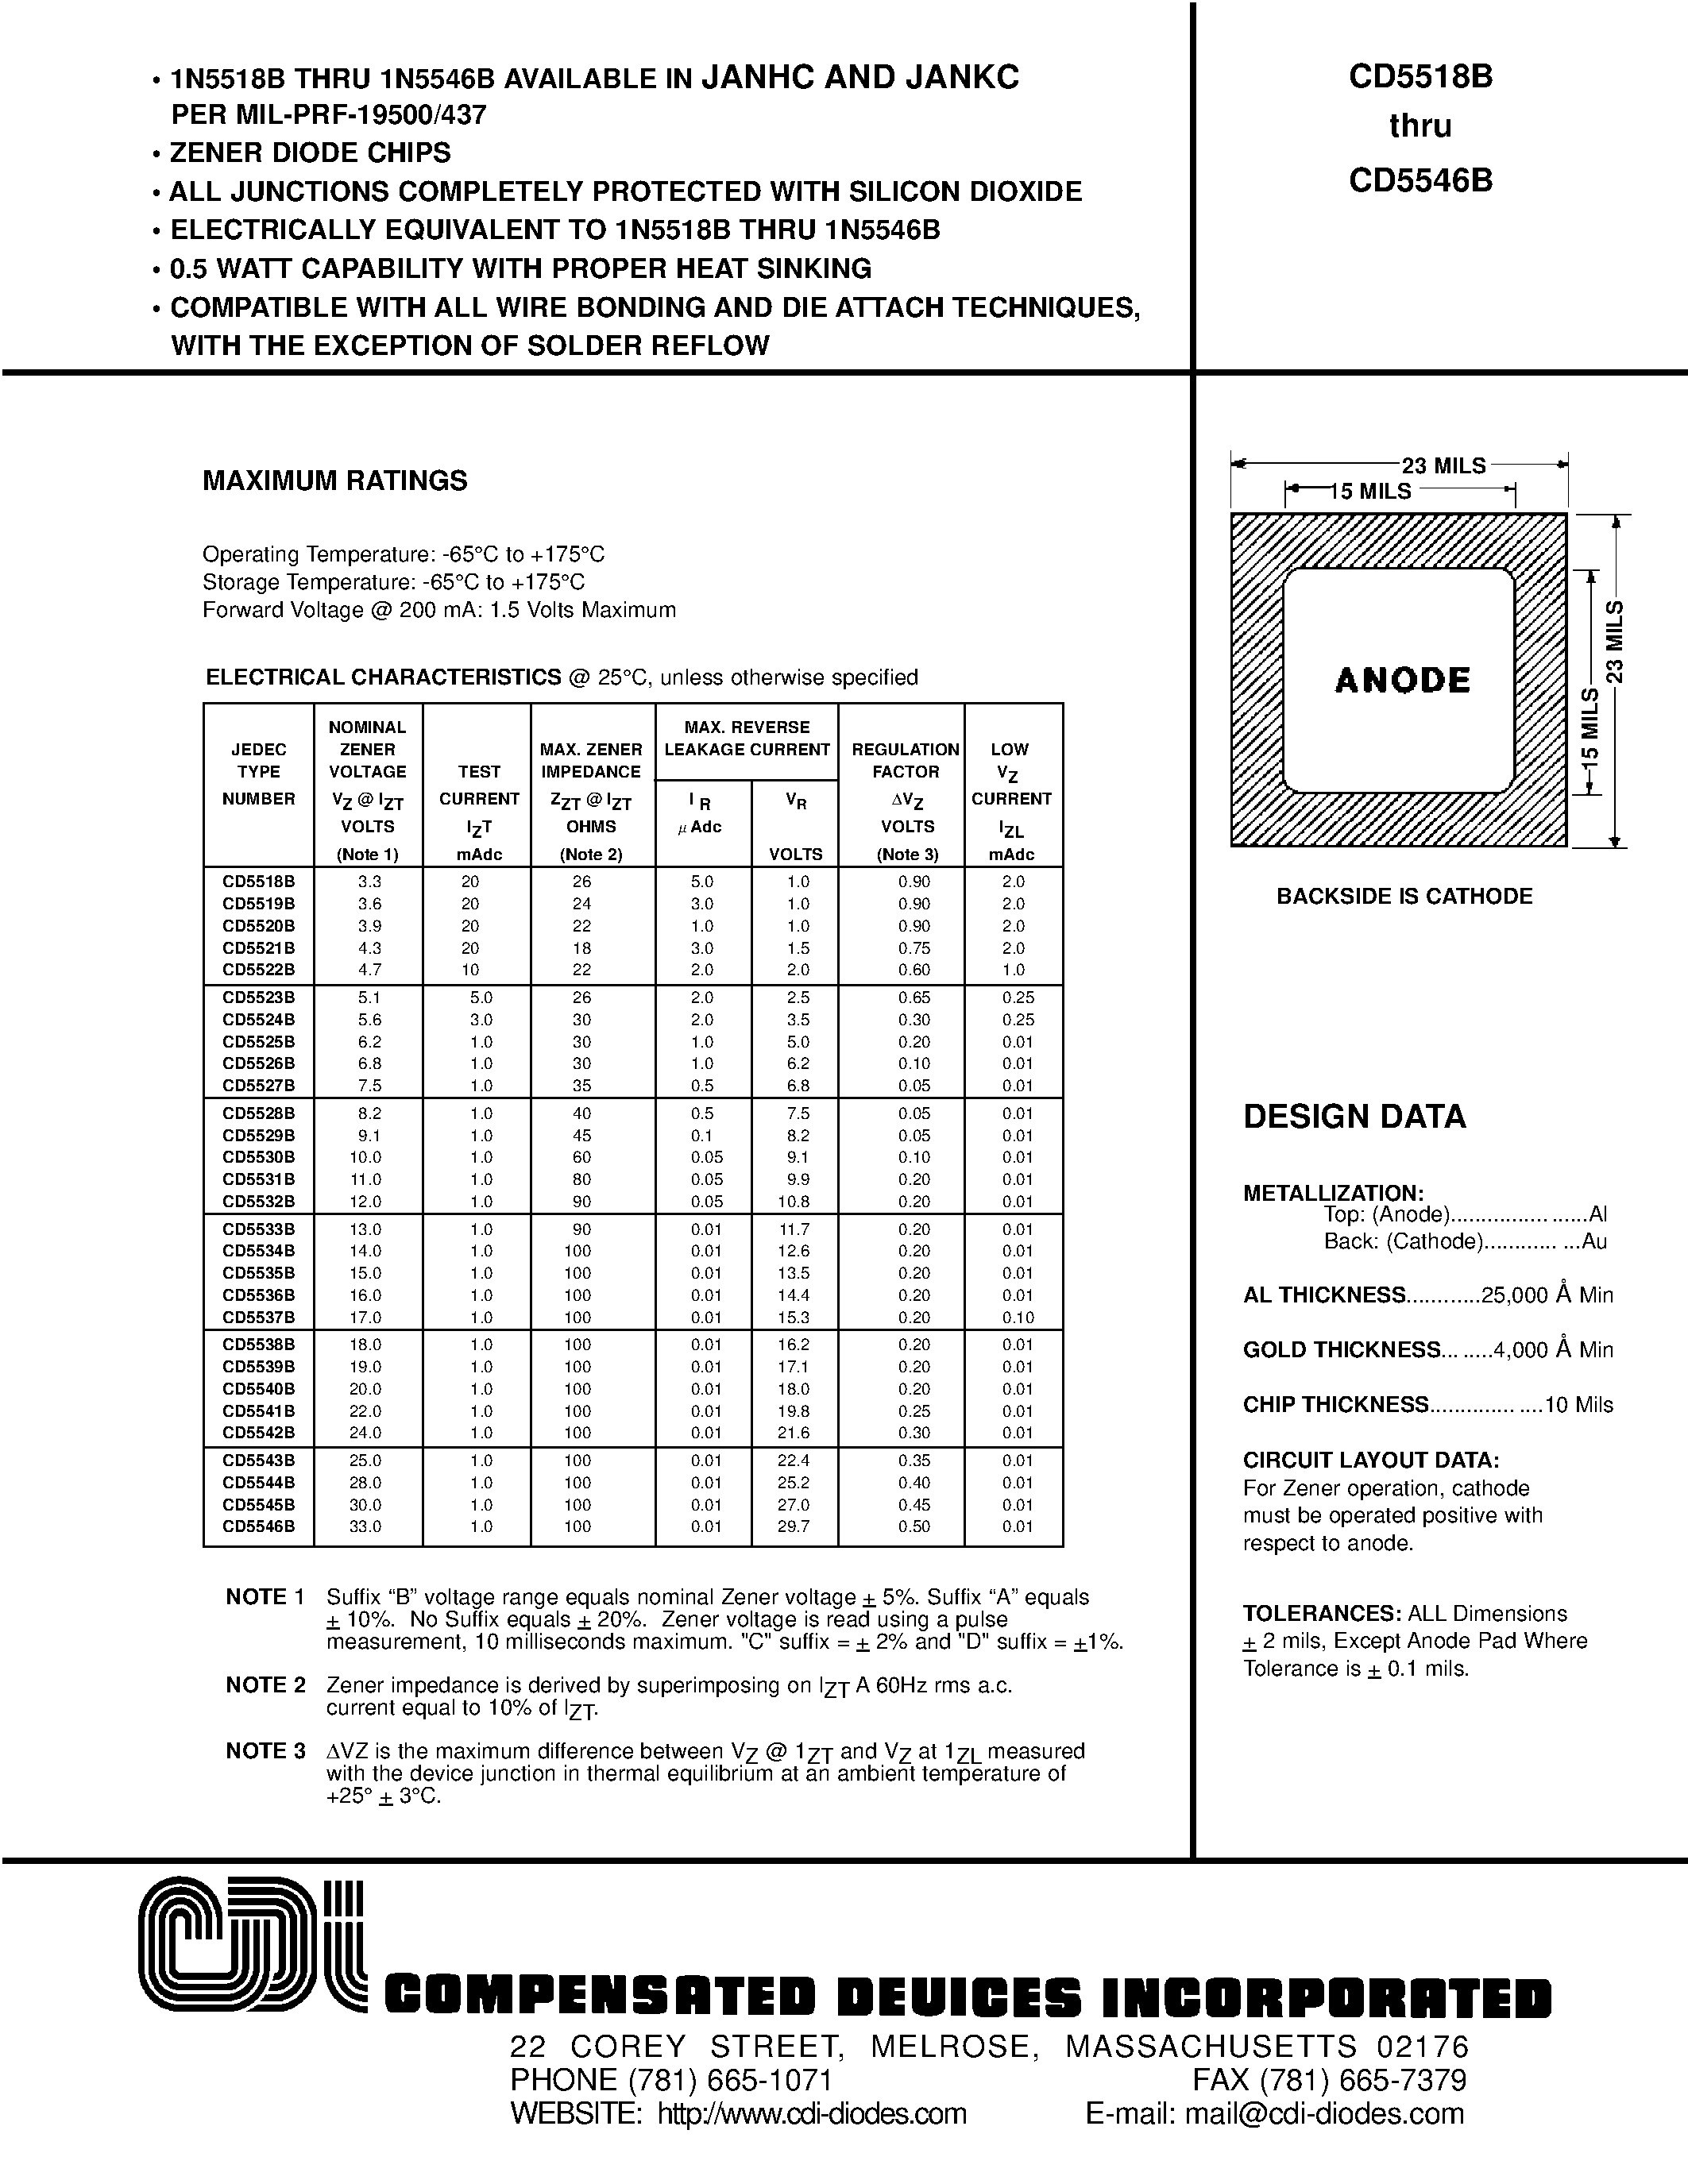 Datasheet CD5532B - ZENER DIODE CHIPS page 1